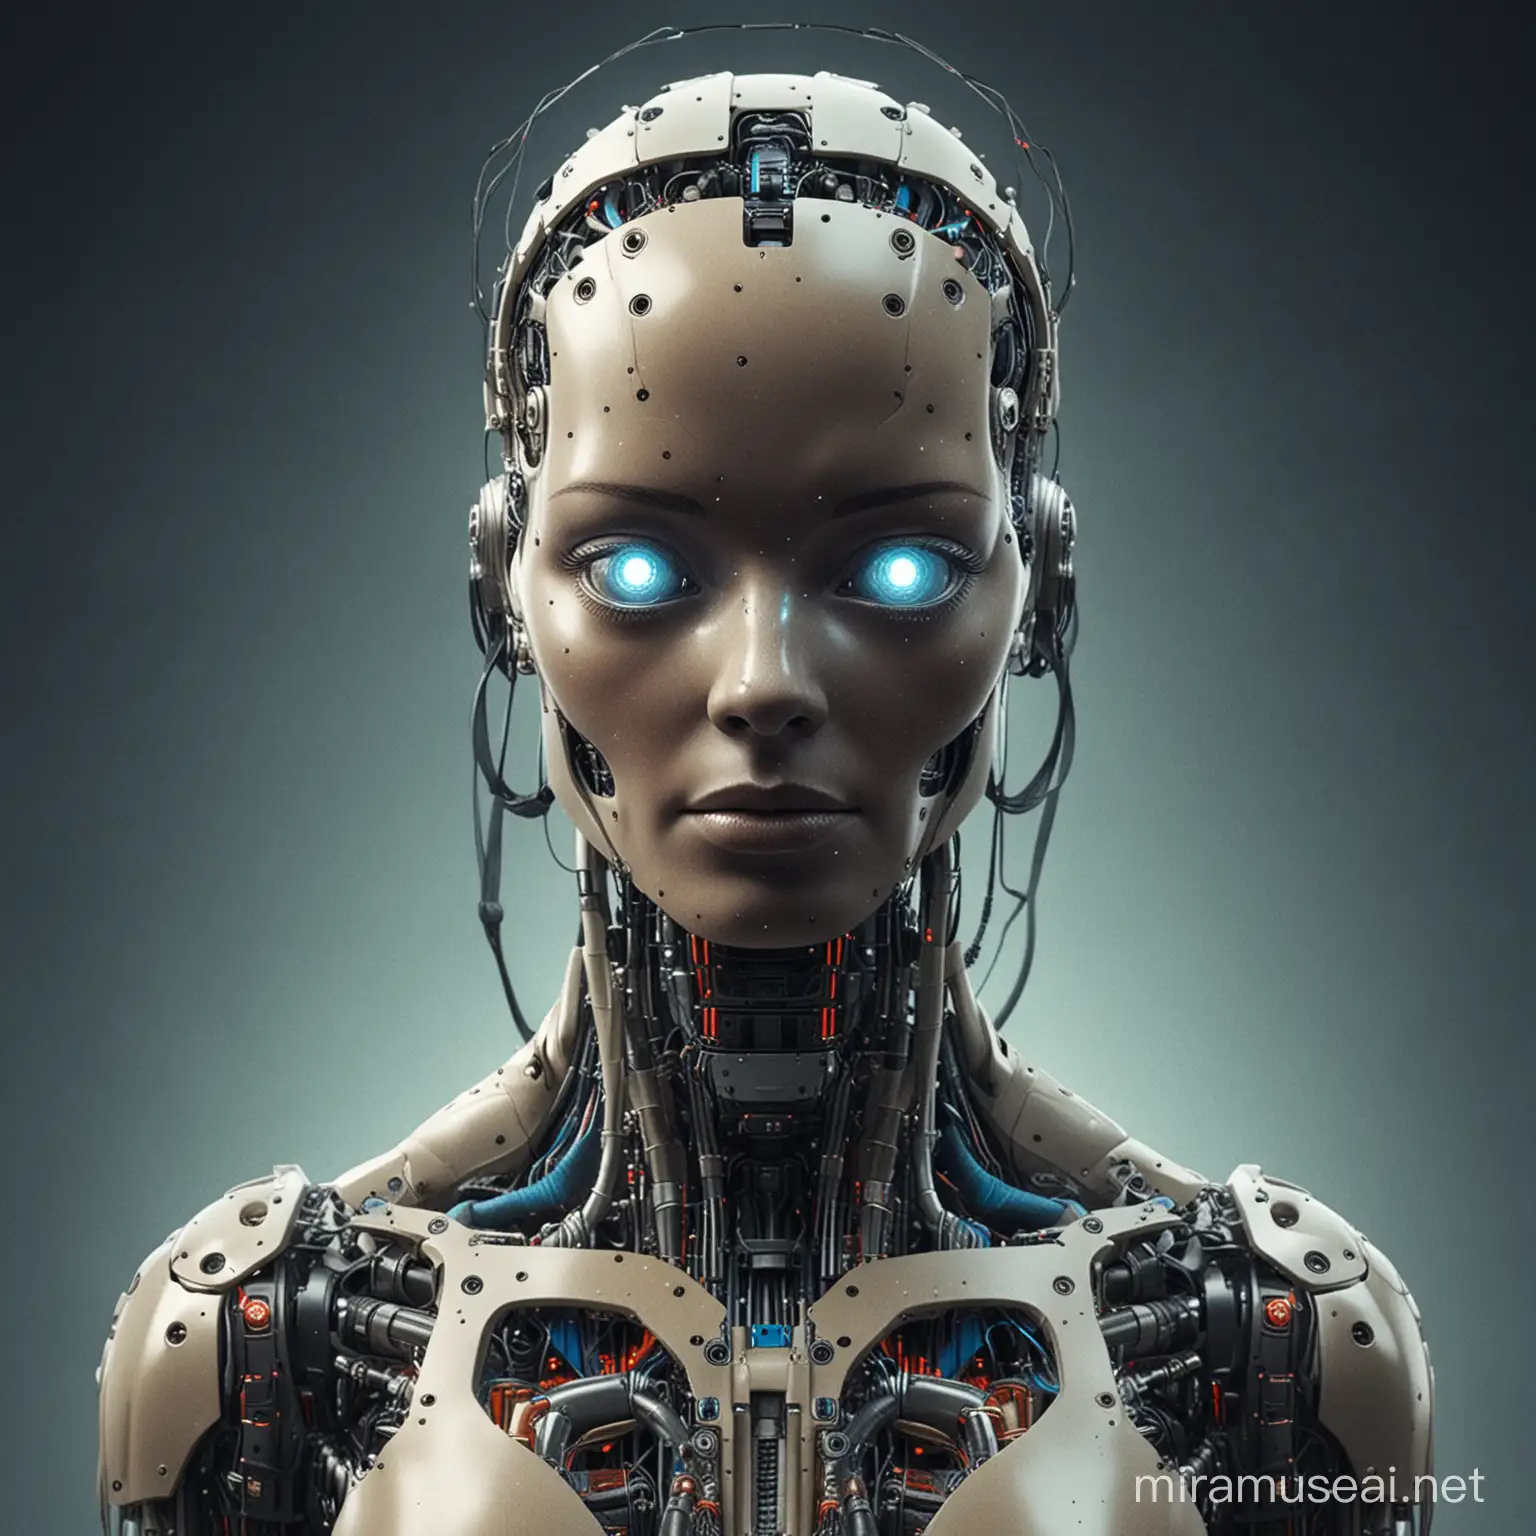 Menacing Artificial Intelligence A Threatening Encounter with Digital Sentience